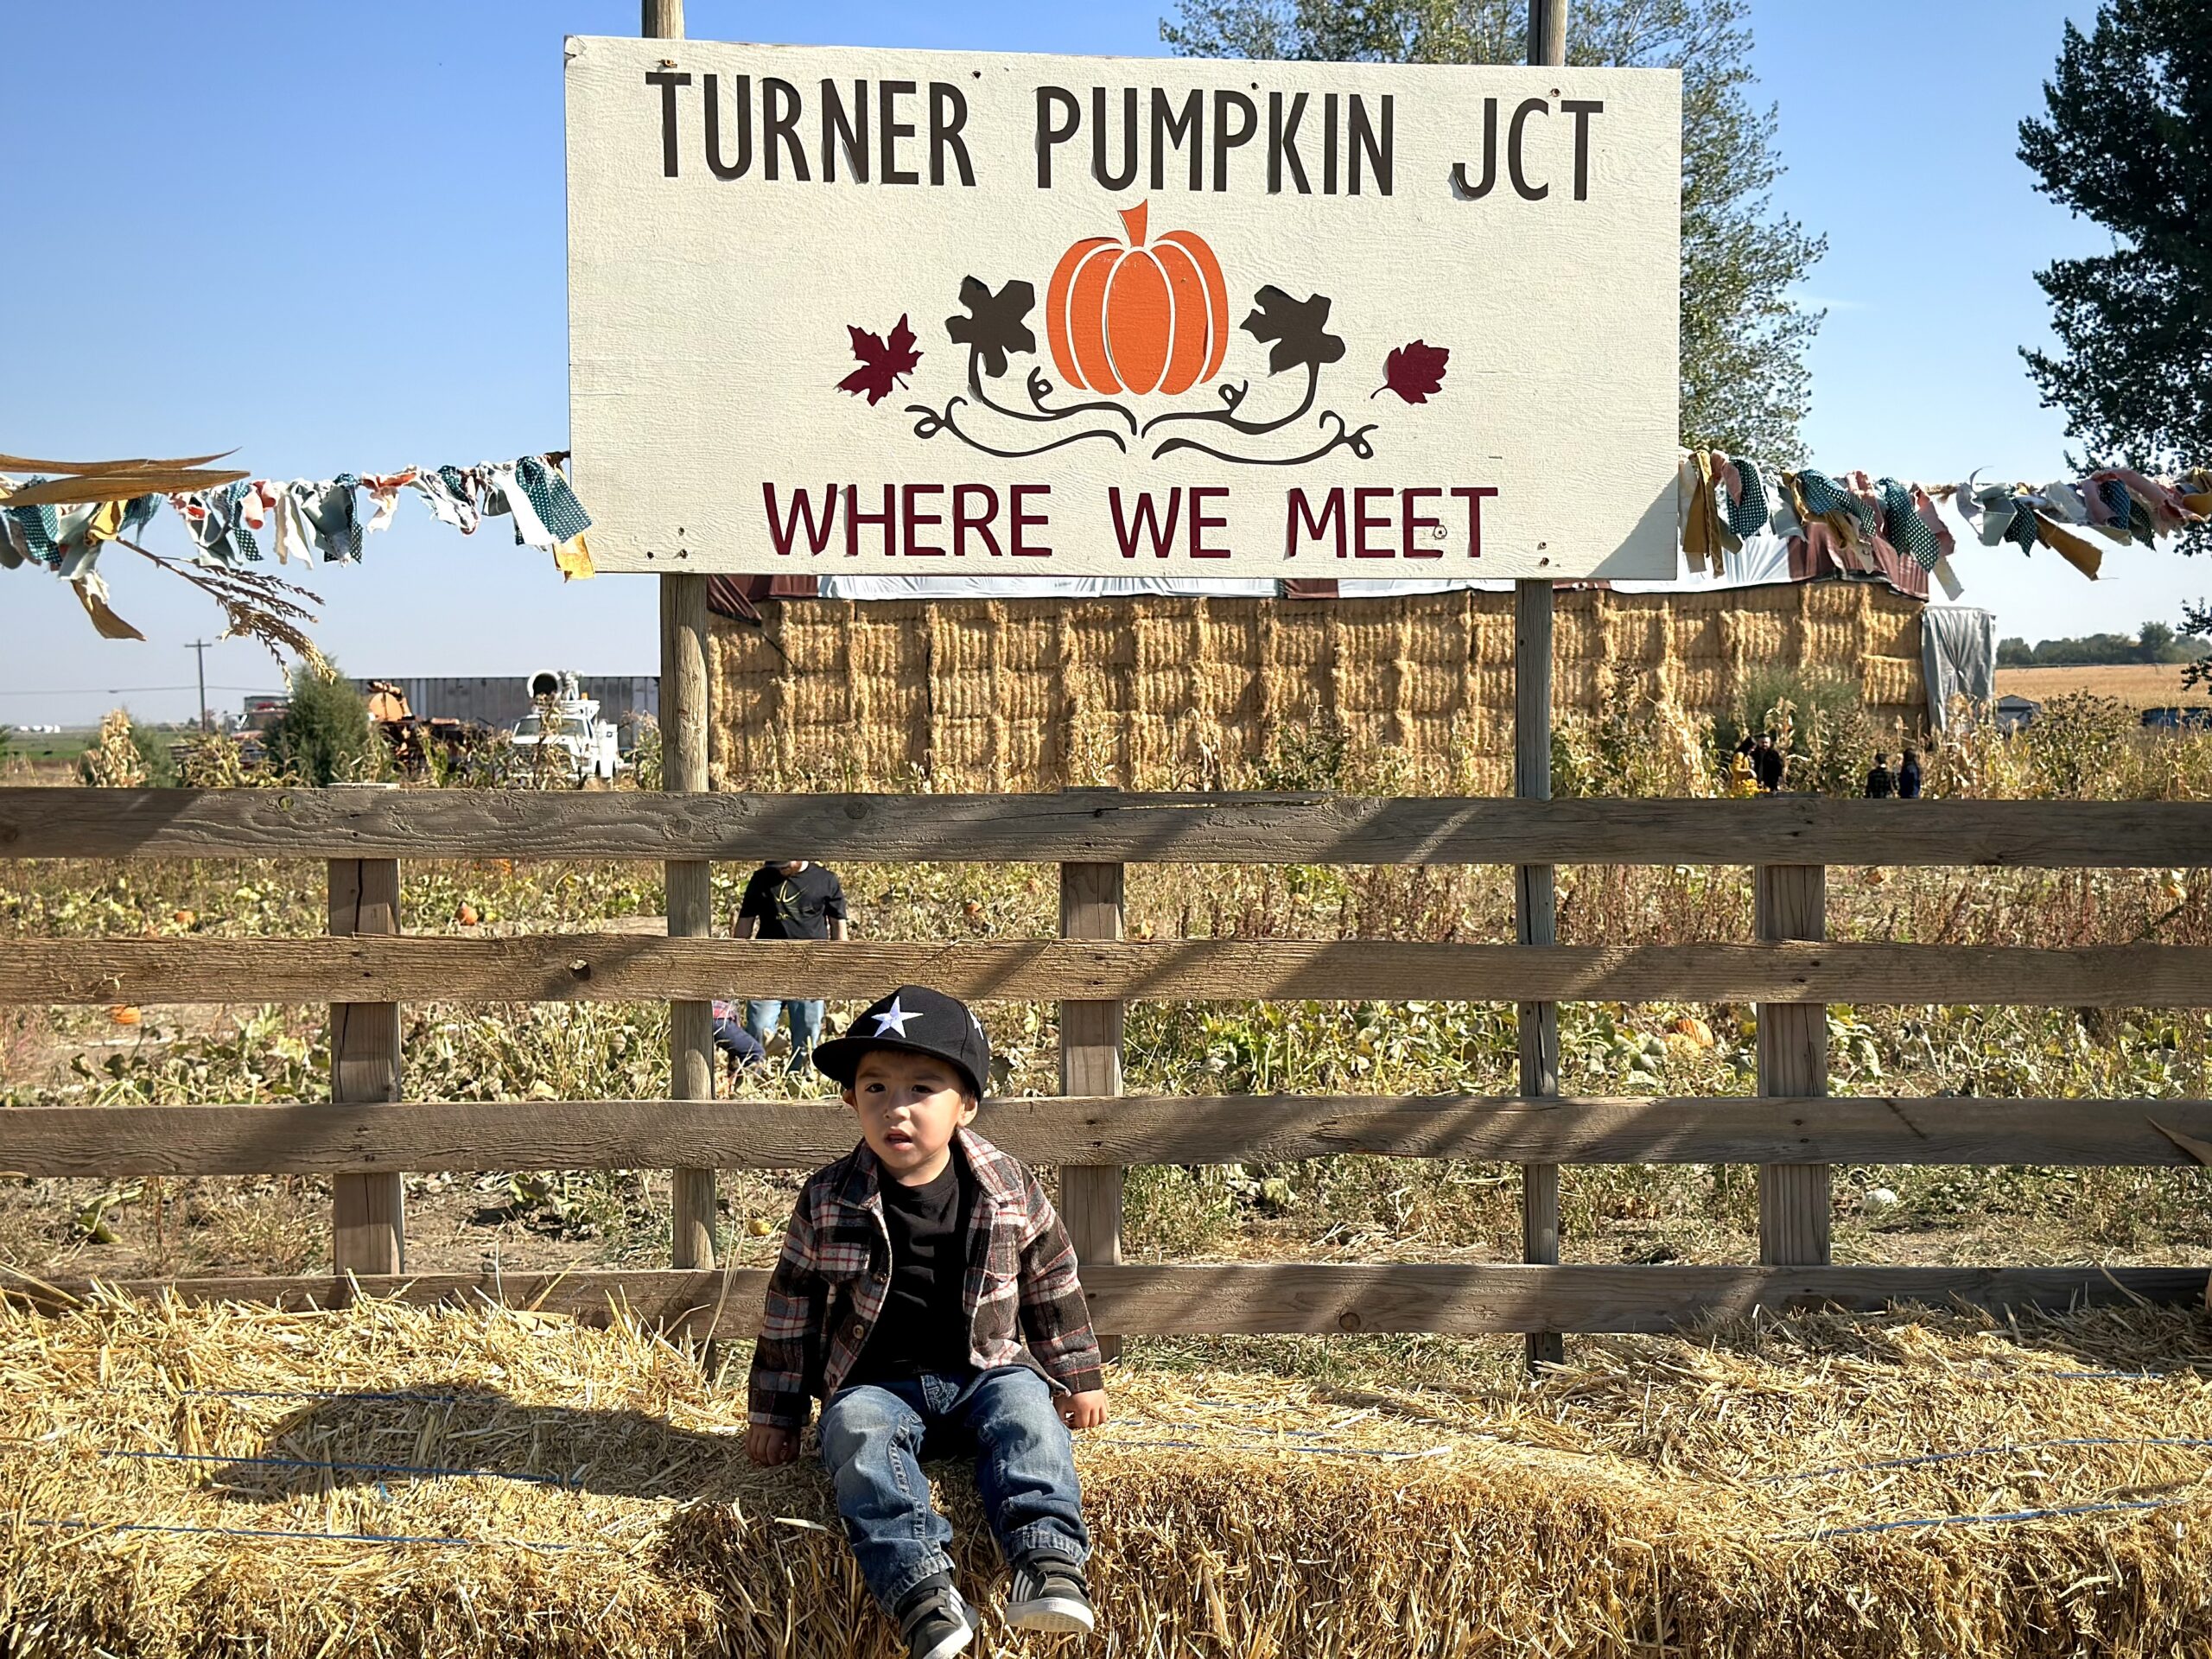 Turner pumpkin junction -075